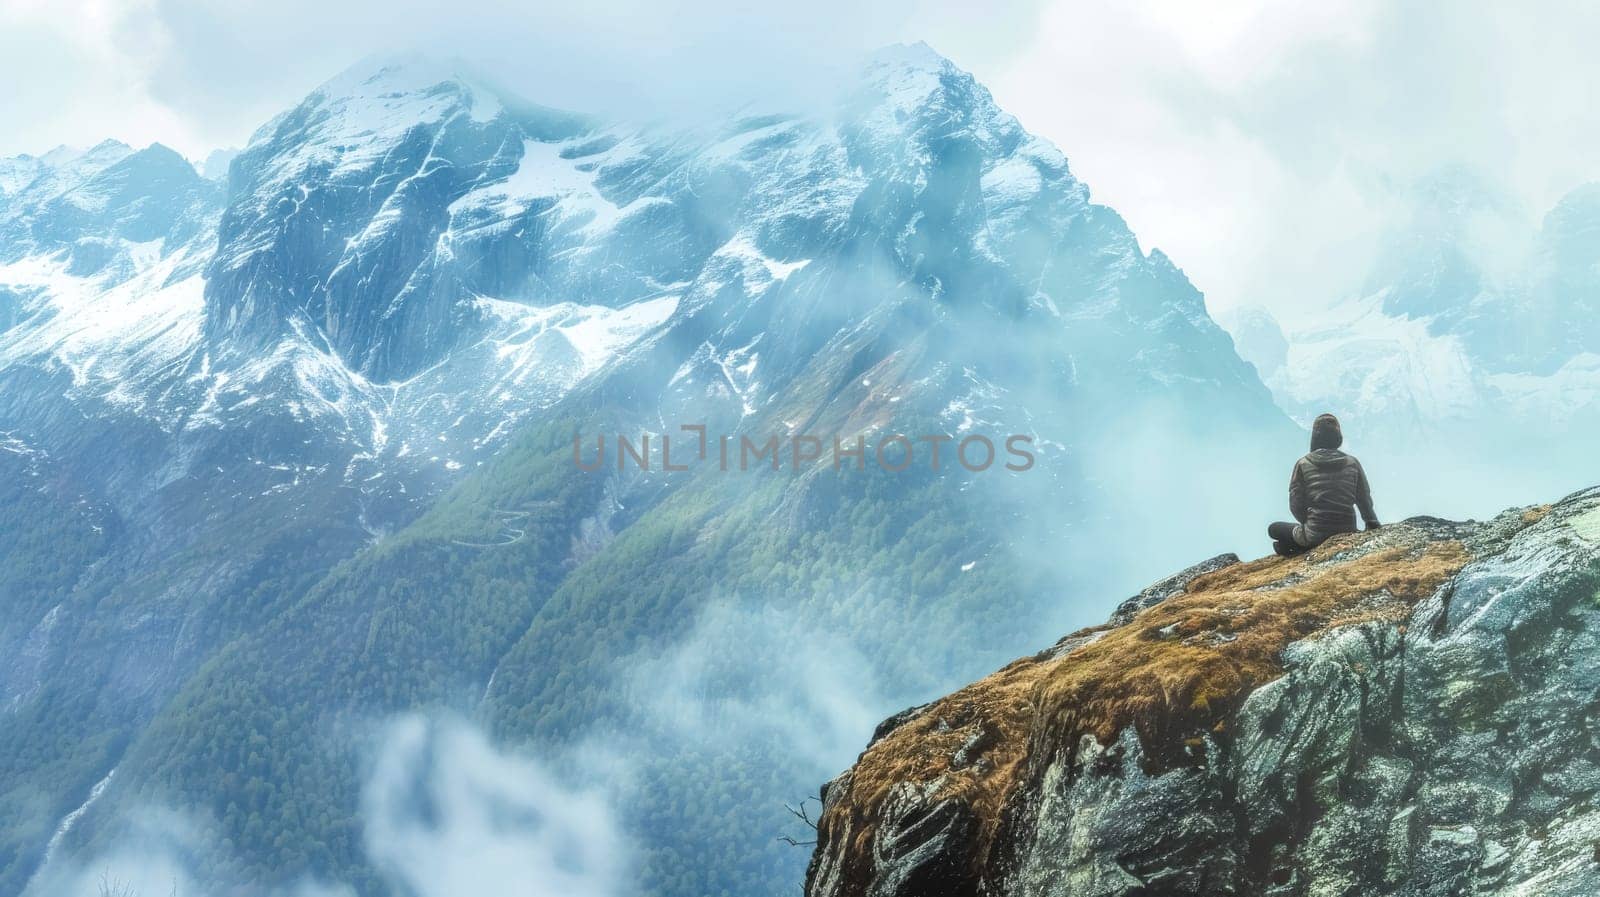 Solitary traveler contemplating mountain vista by Edophoto